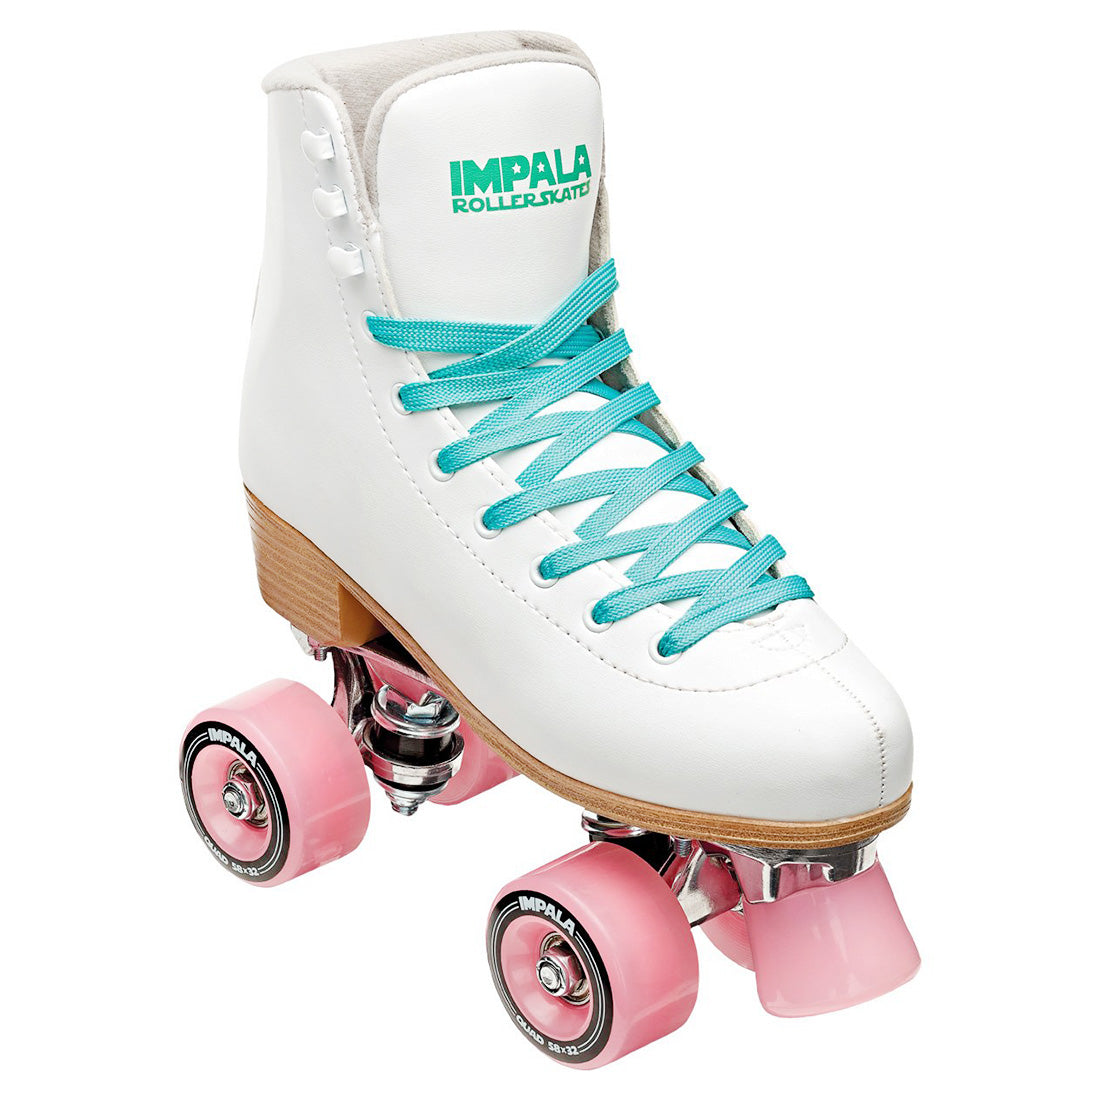 Impala Sidewalk - White Roller Skates